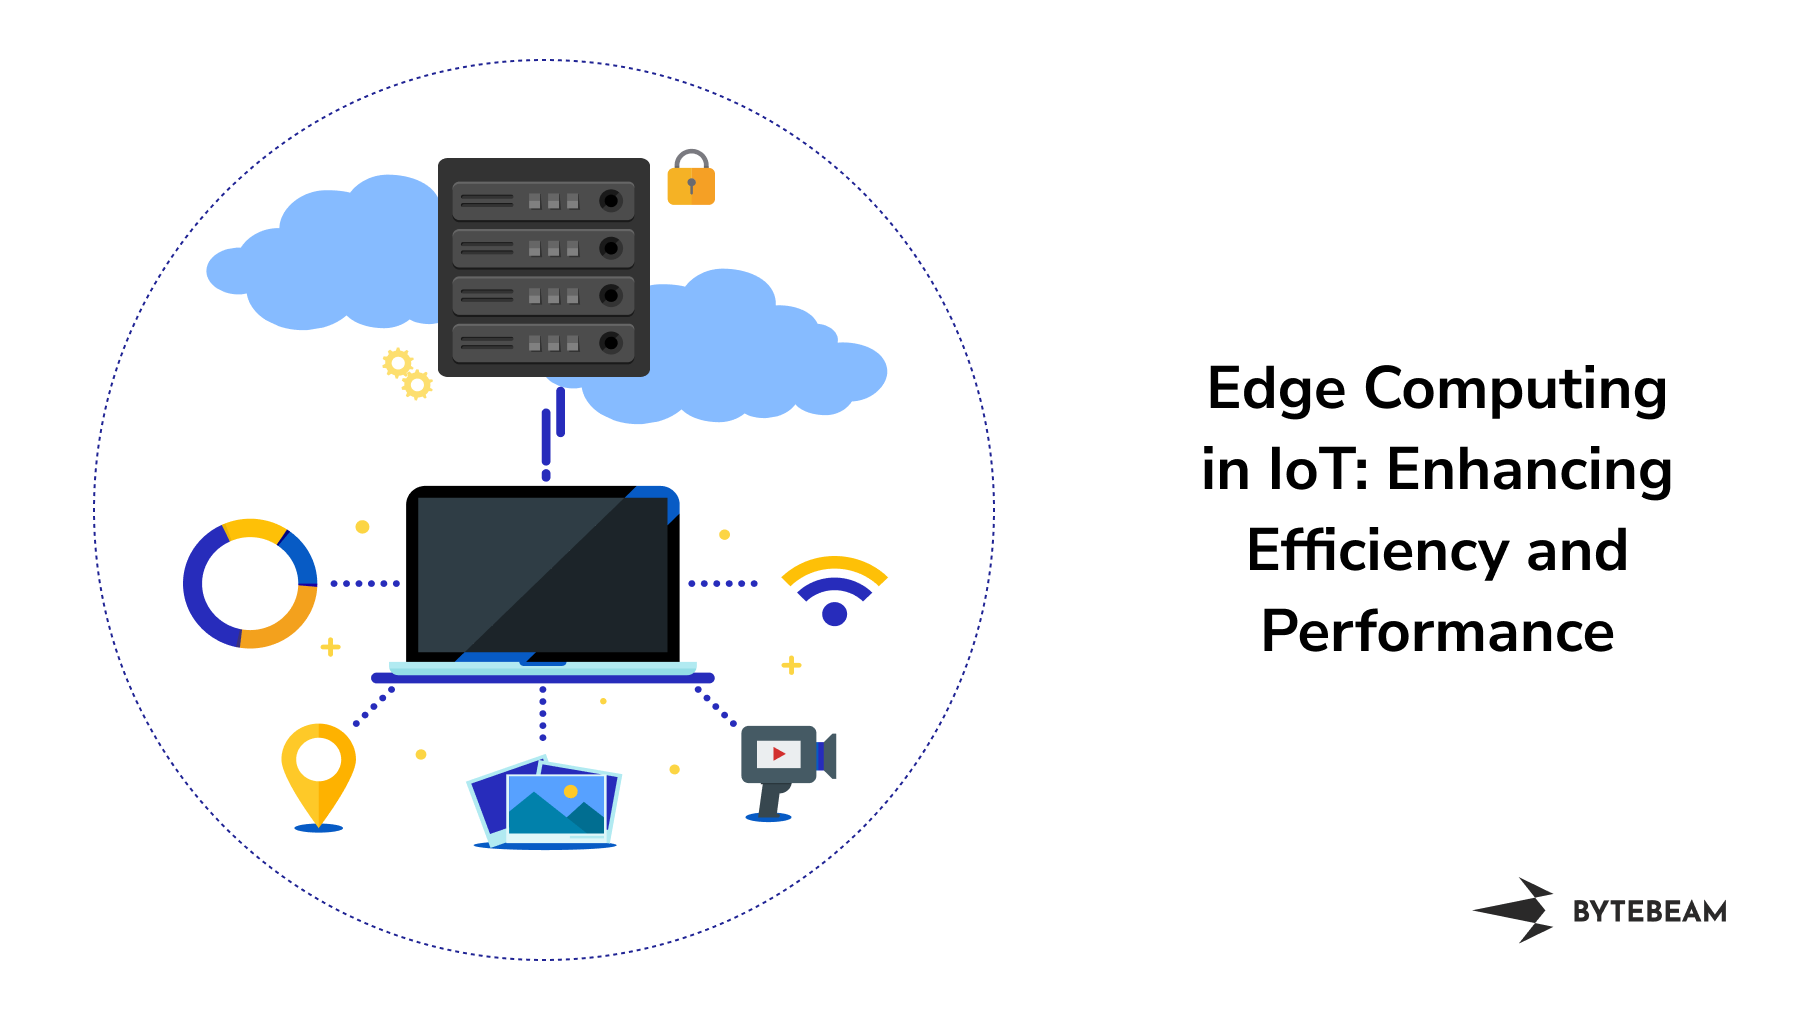 Edge computing in IoT